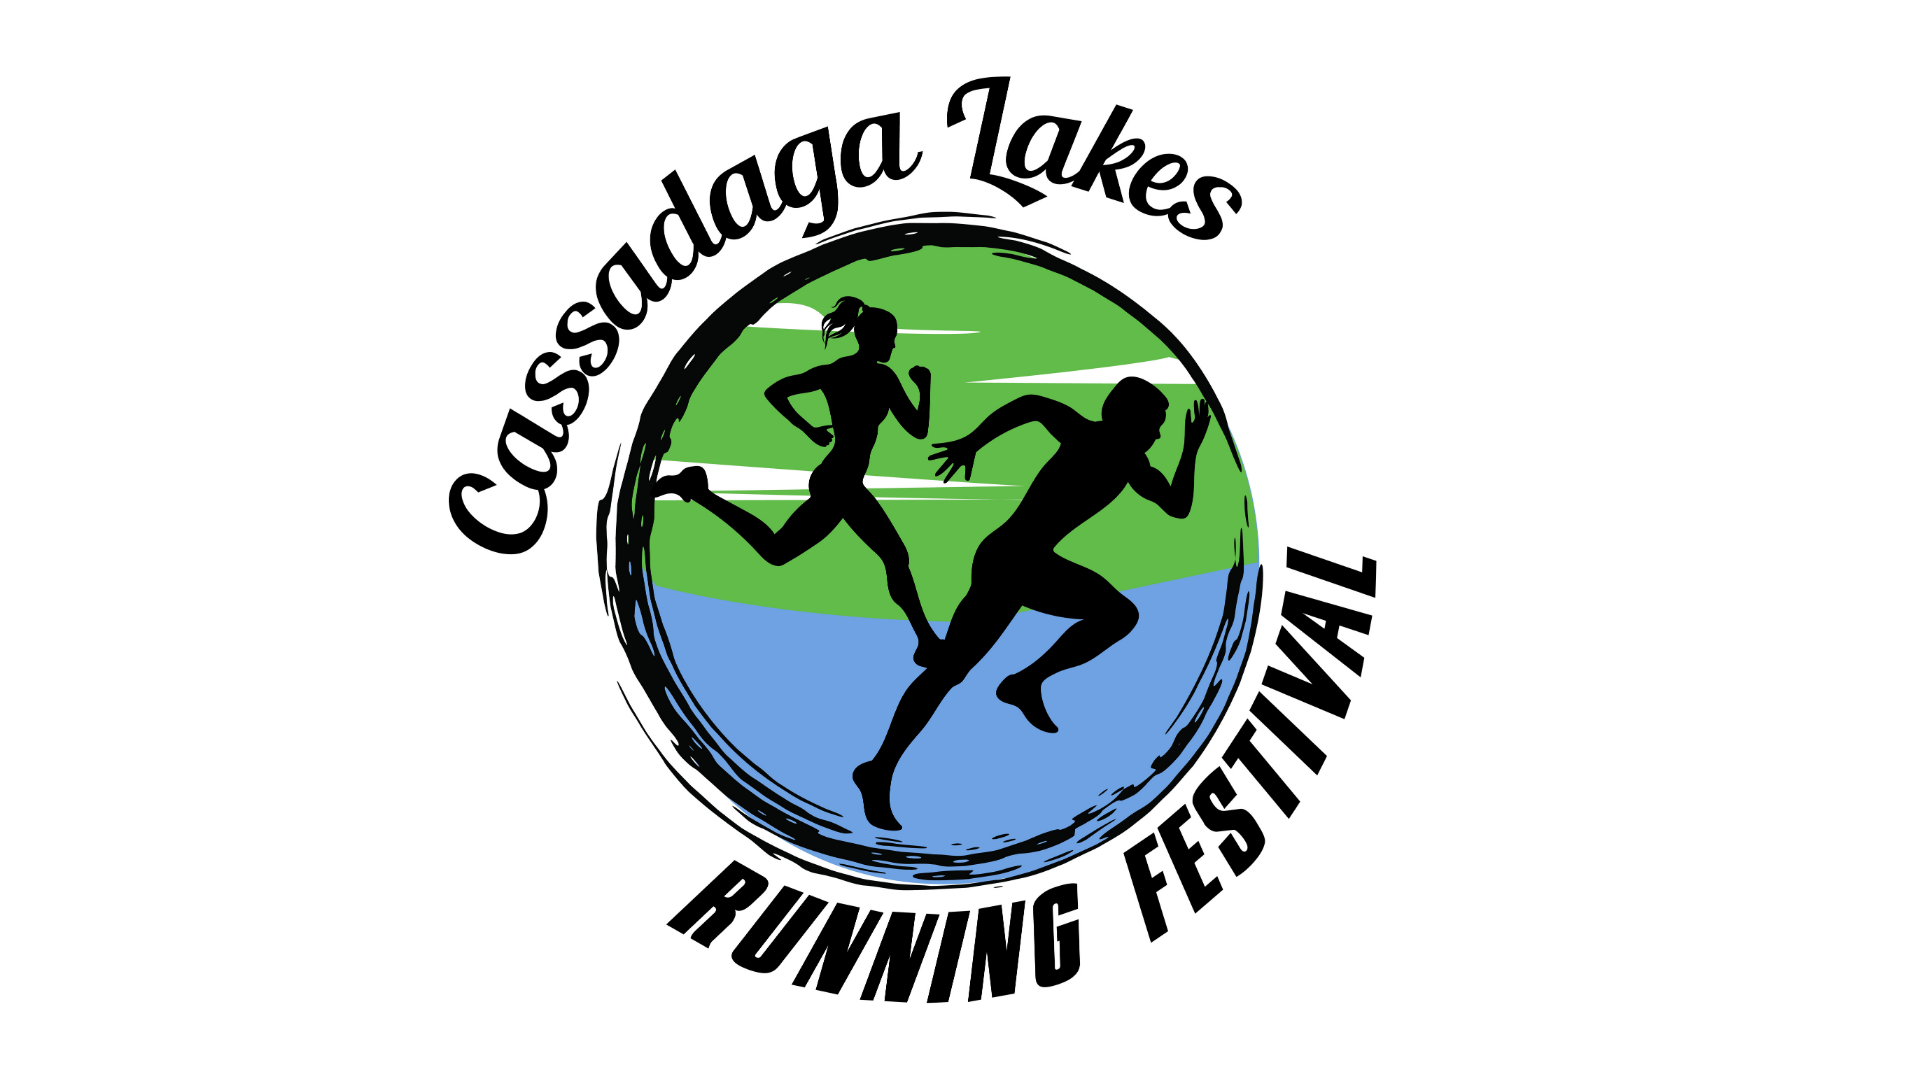 Cassadaga Lakes Running Festival